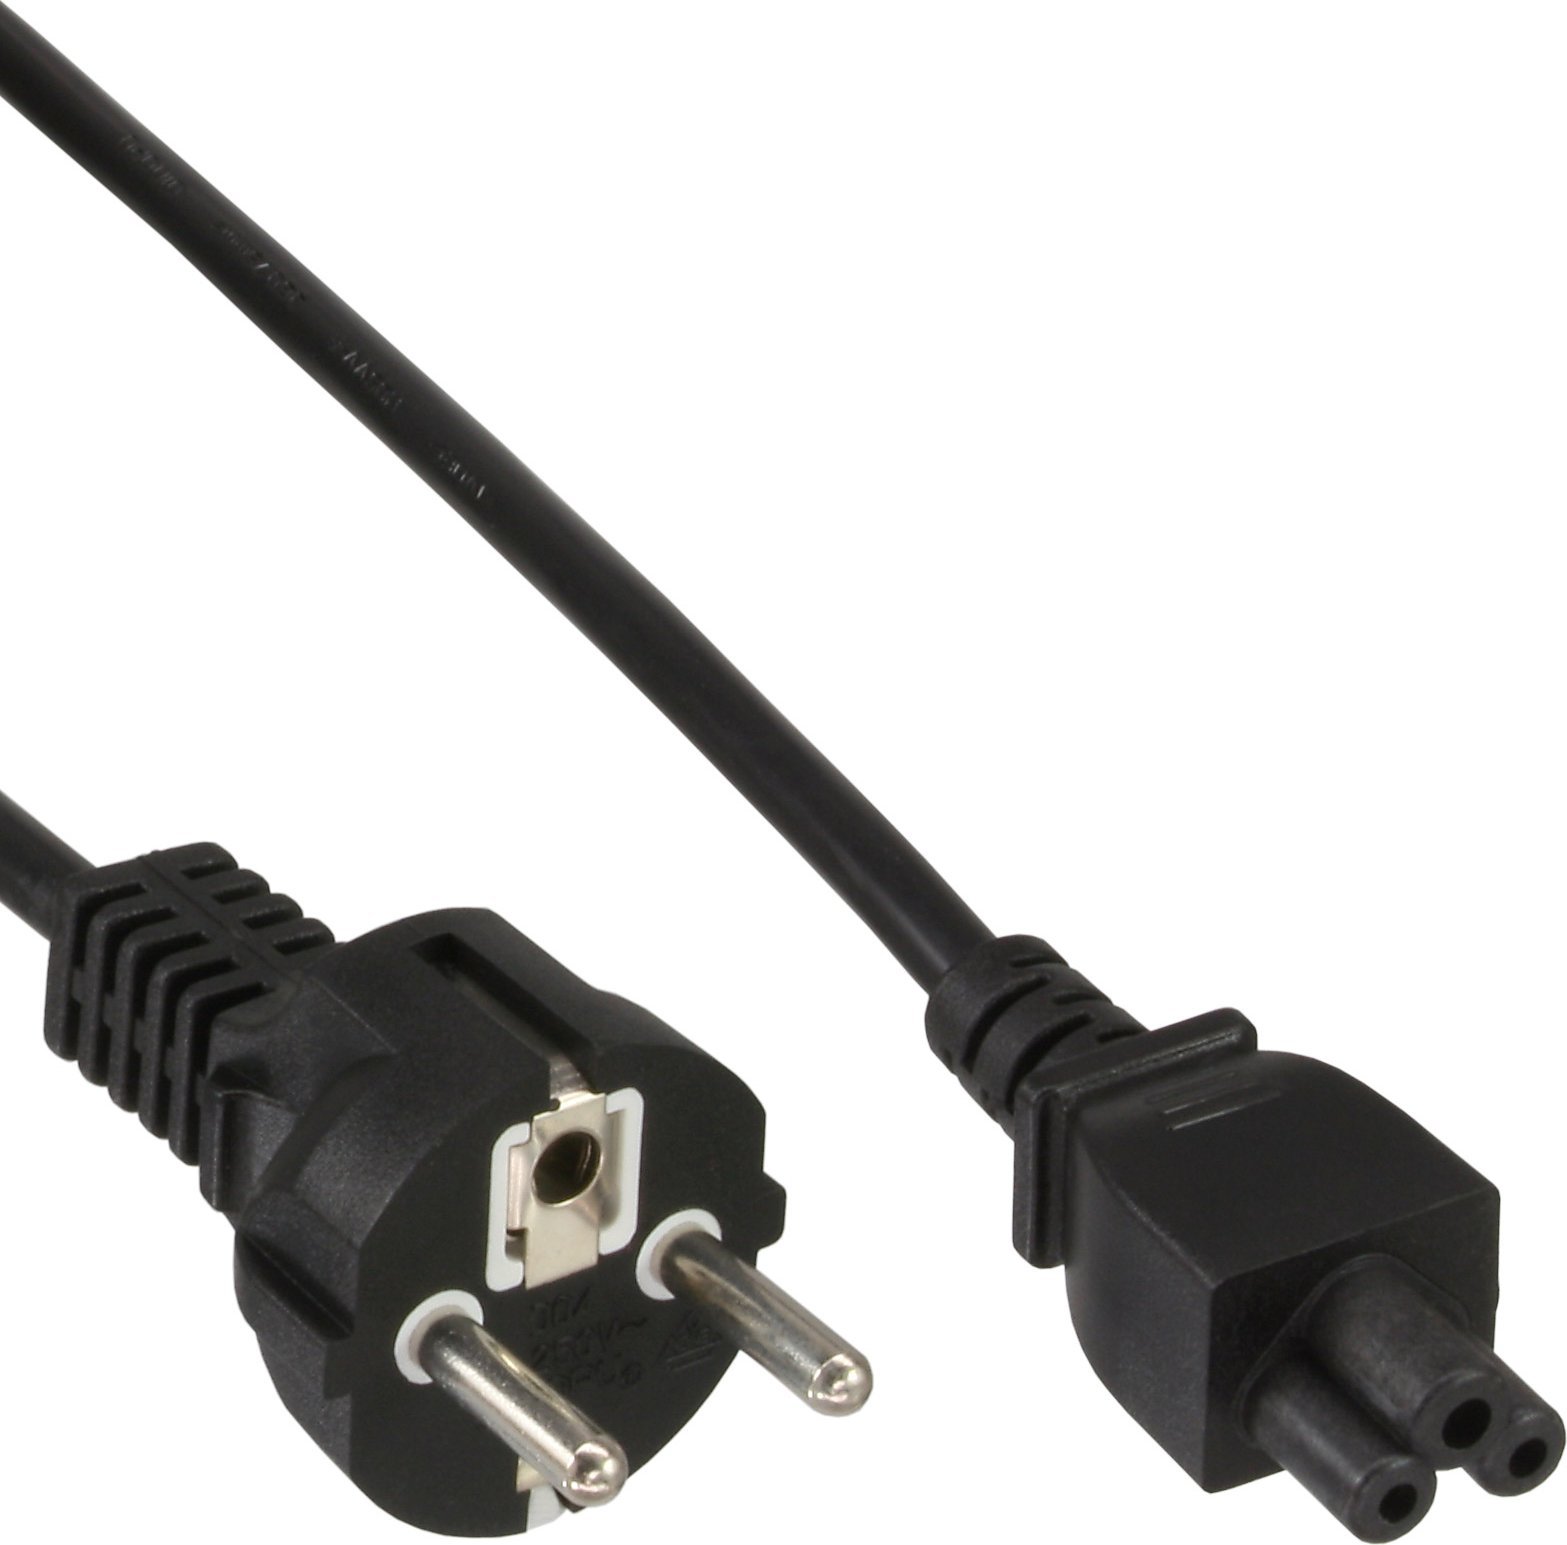 Zdjęcia - Kabel InLine  zasilający  40pcs. pack Bulk-Pack ® Power cord for noteb 